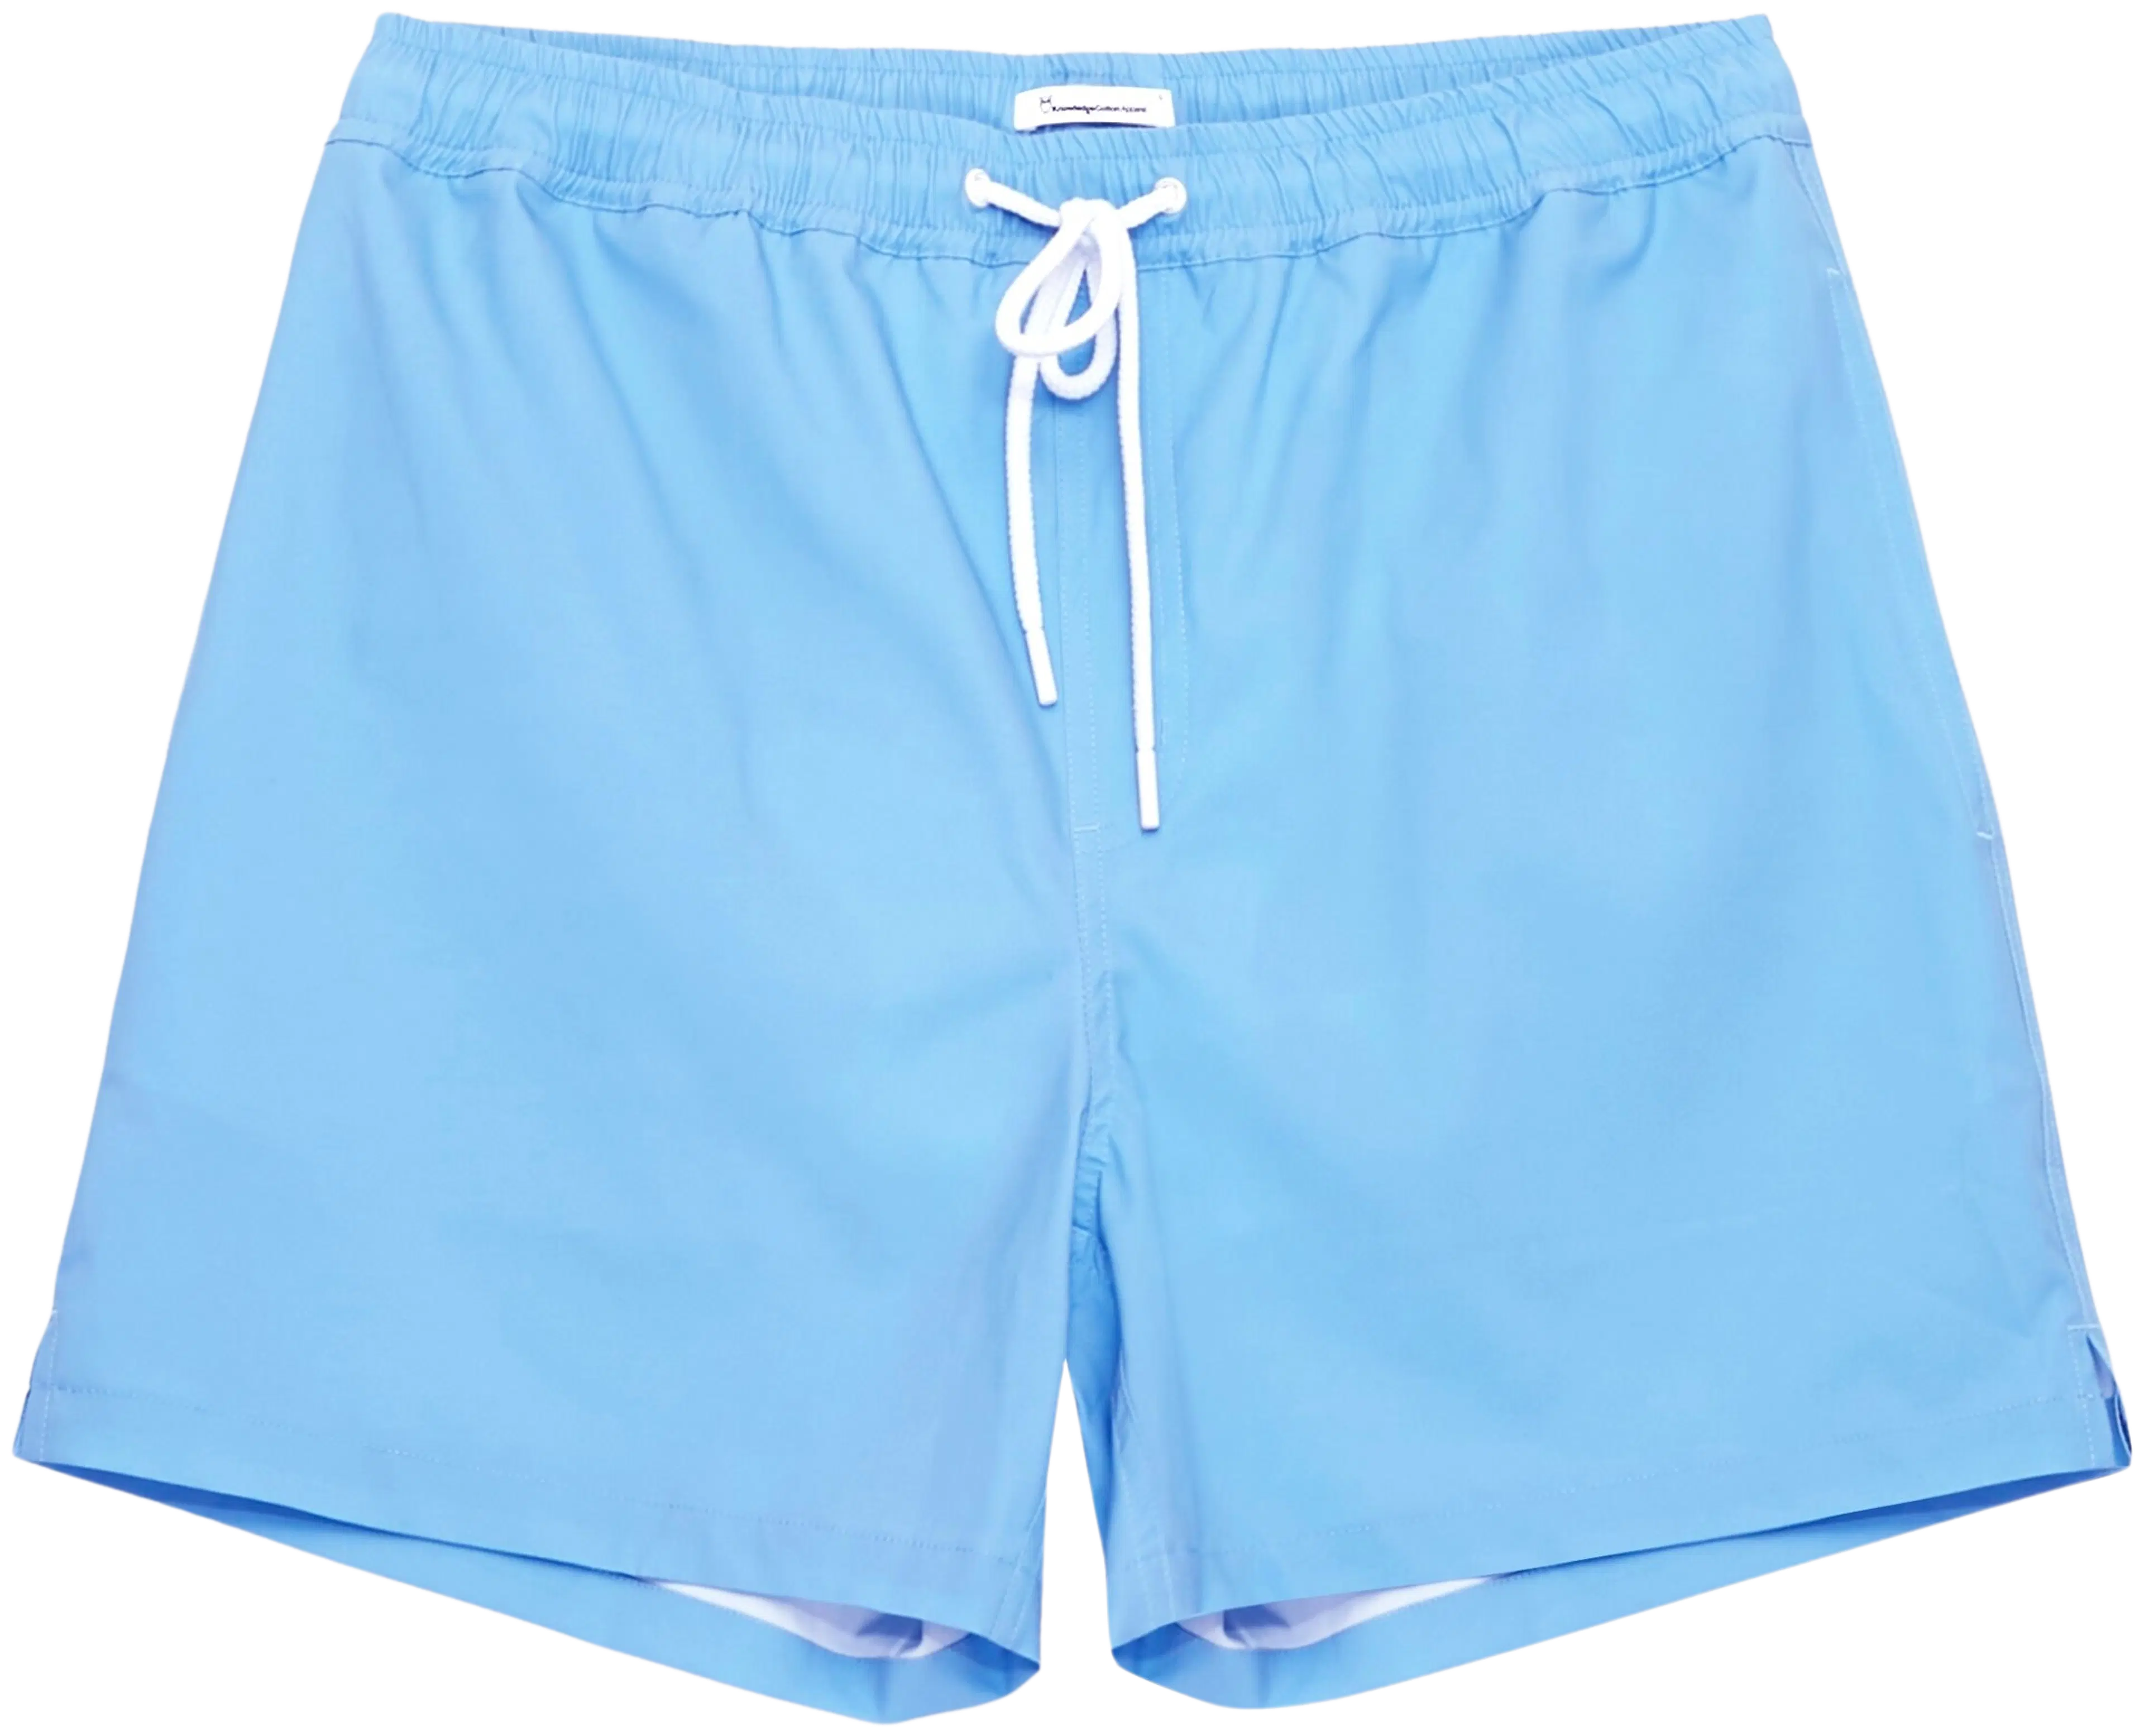 Knowledge cotton apparel Basic swim shortsit